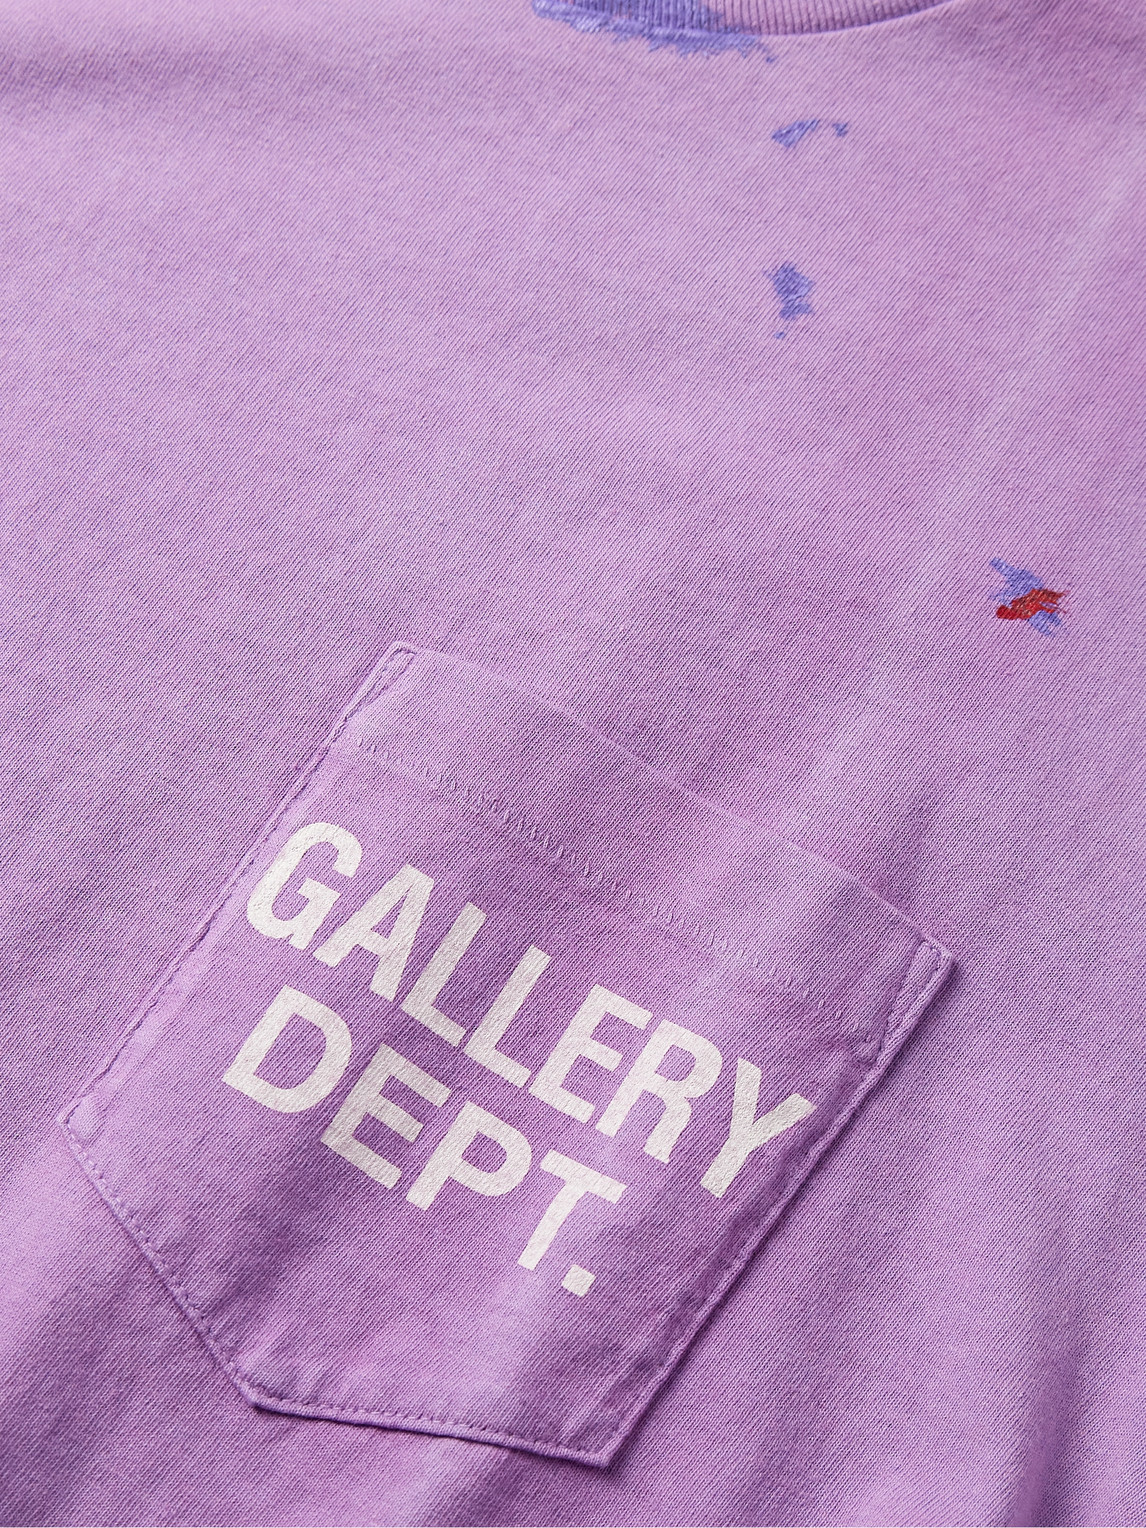 Shop Gallery Dept. Logo-print Paint-splattered Cotton-jersey T-shirt In Purple